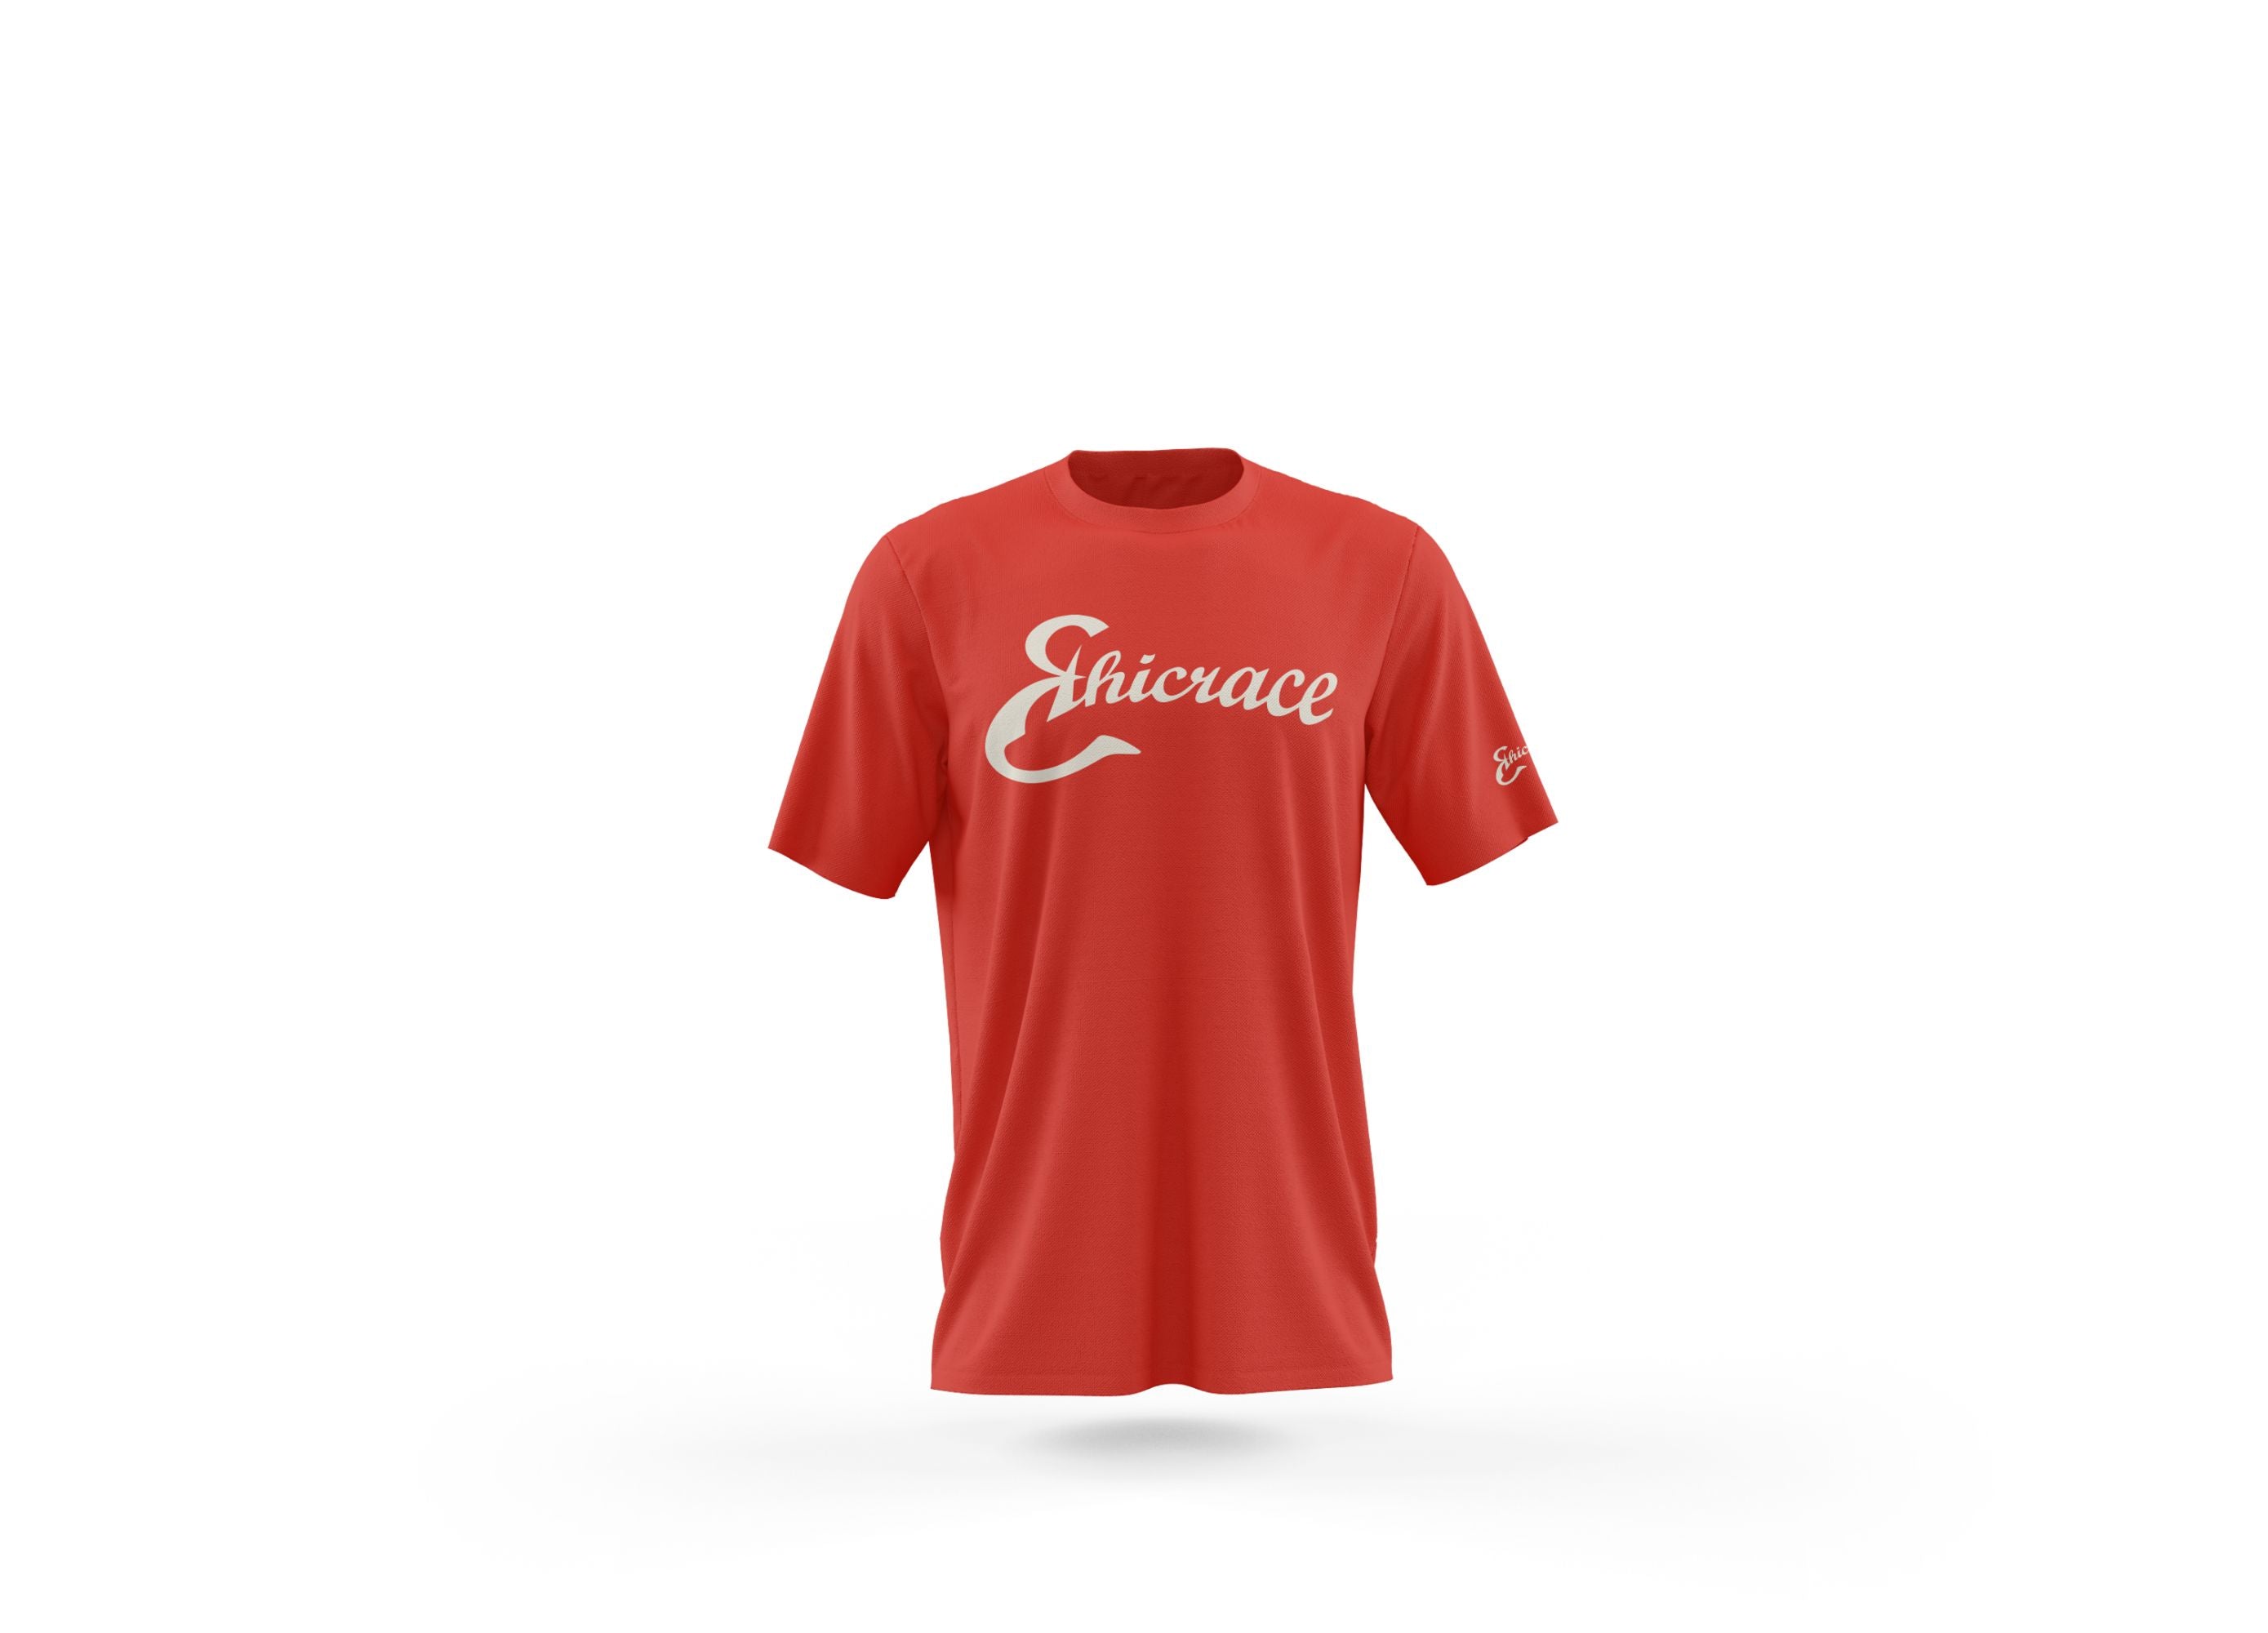 Ethicrace Cursive Logo Shirt for Men (Red)